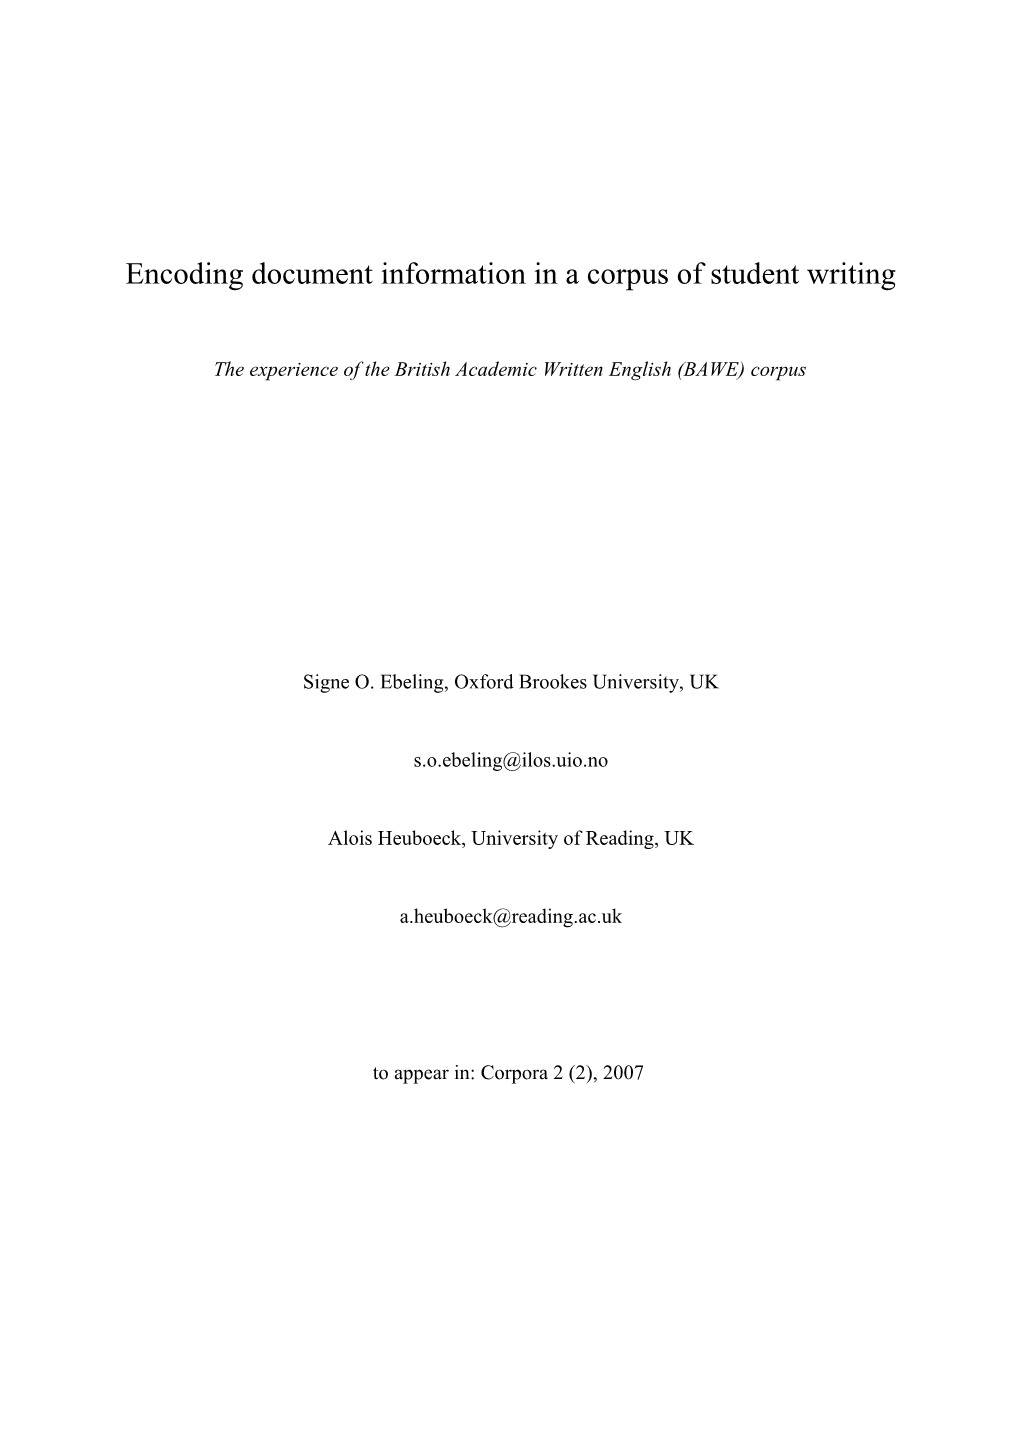 Compiling the British Academic Written English Corpus